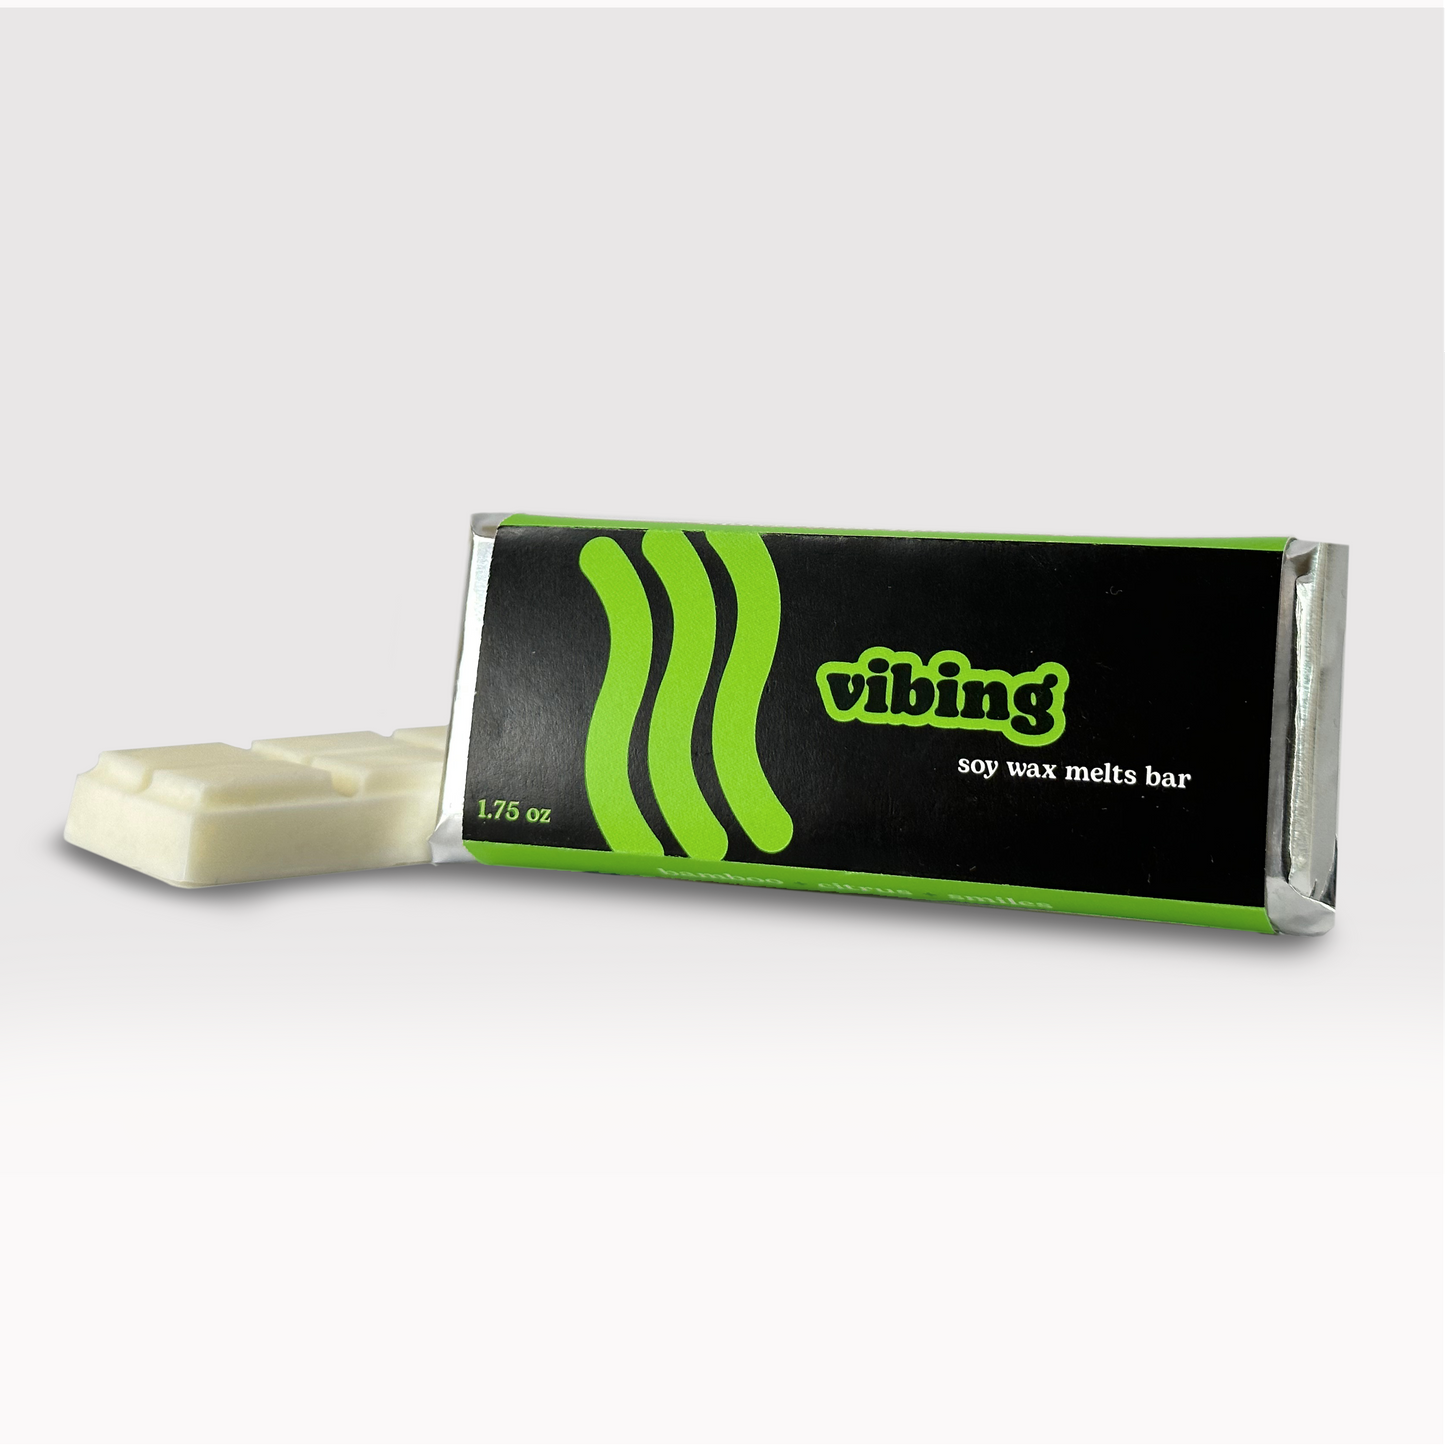 vibing wax melt bar